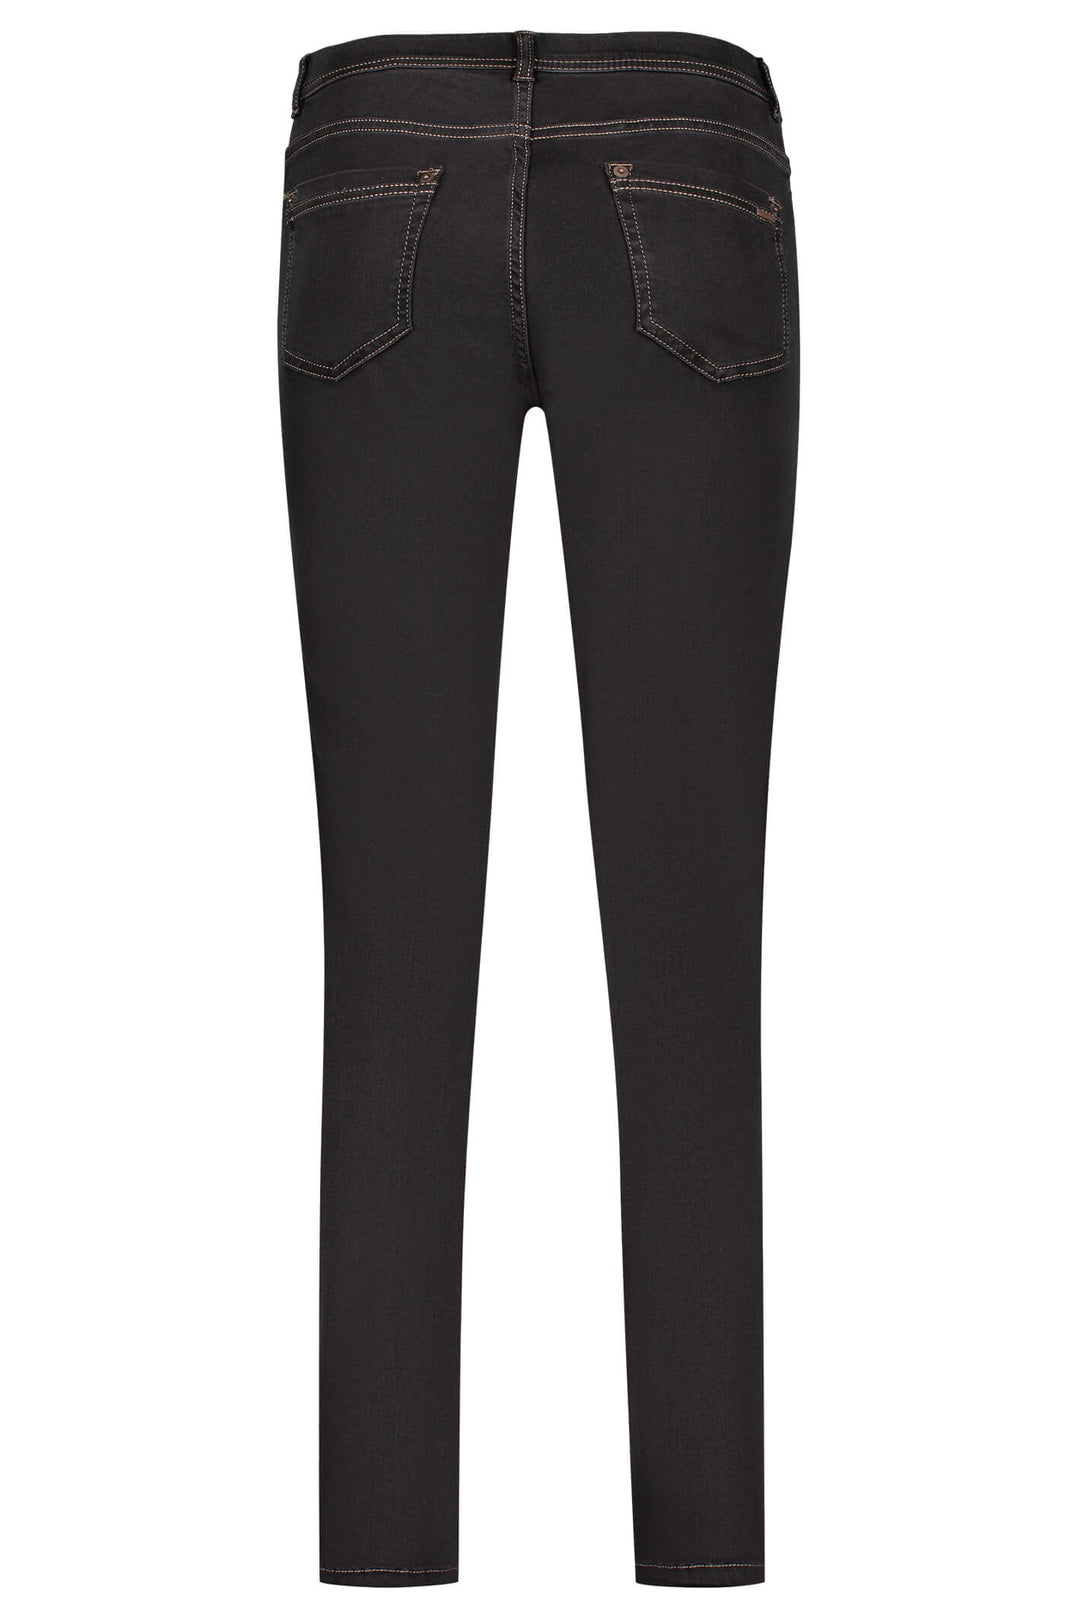 Zerres Gina 1207-571 09 Black Straight Leg 5 Pocket Jeans - Shirley Allum Boutique